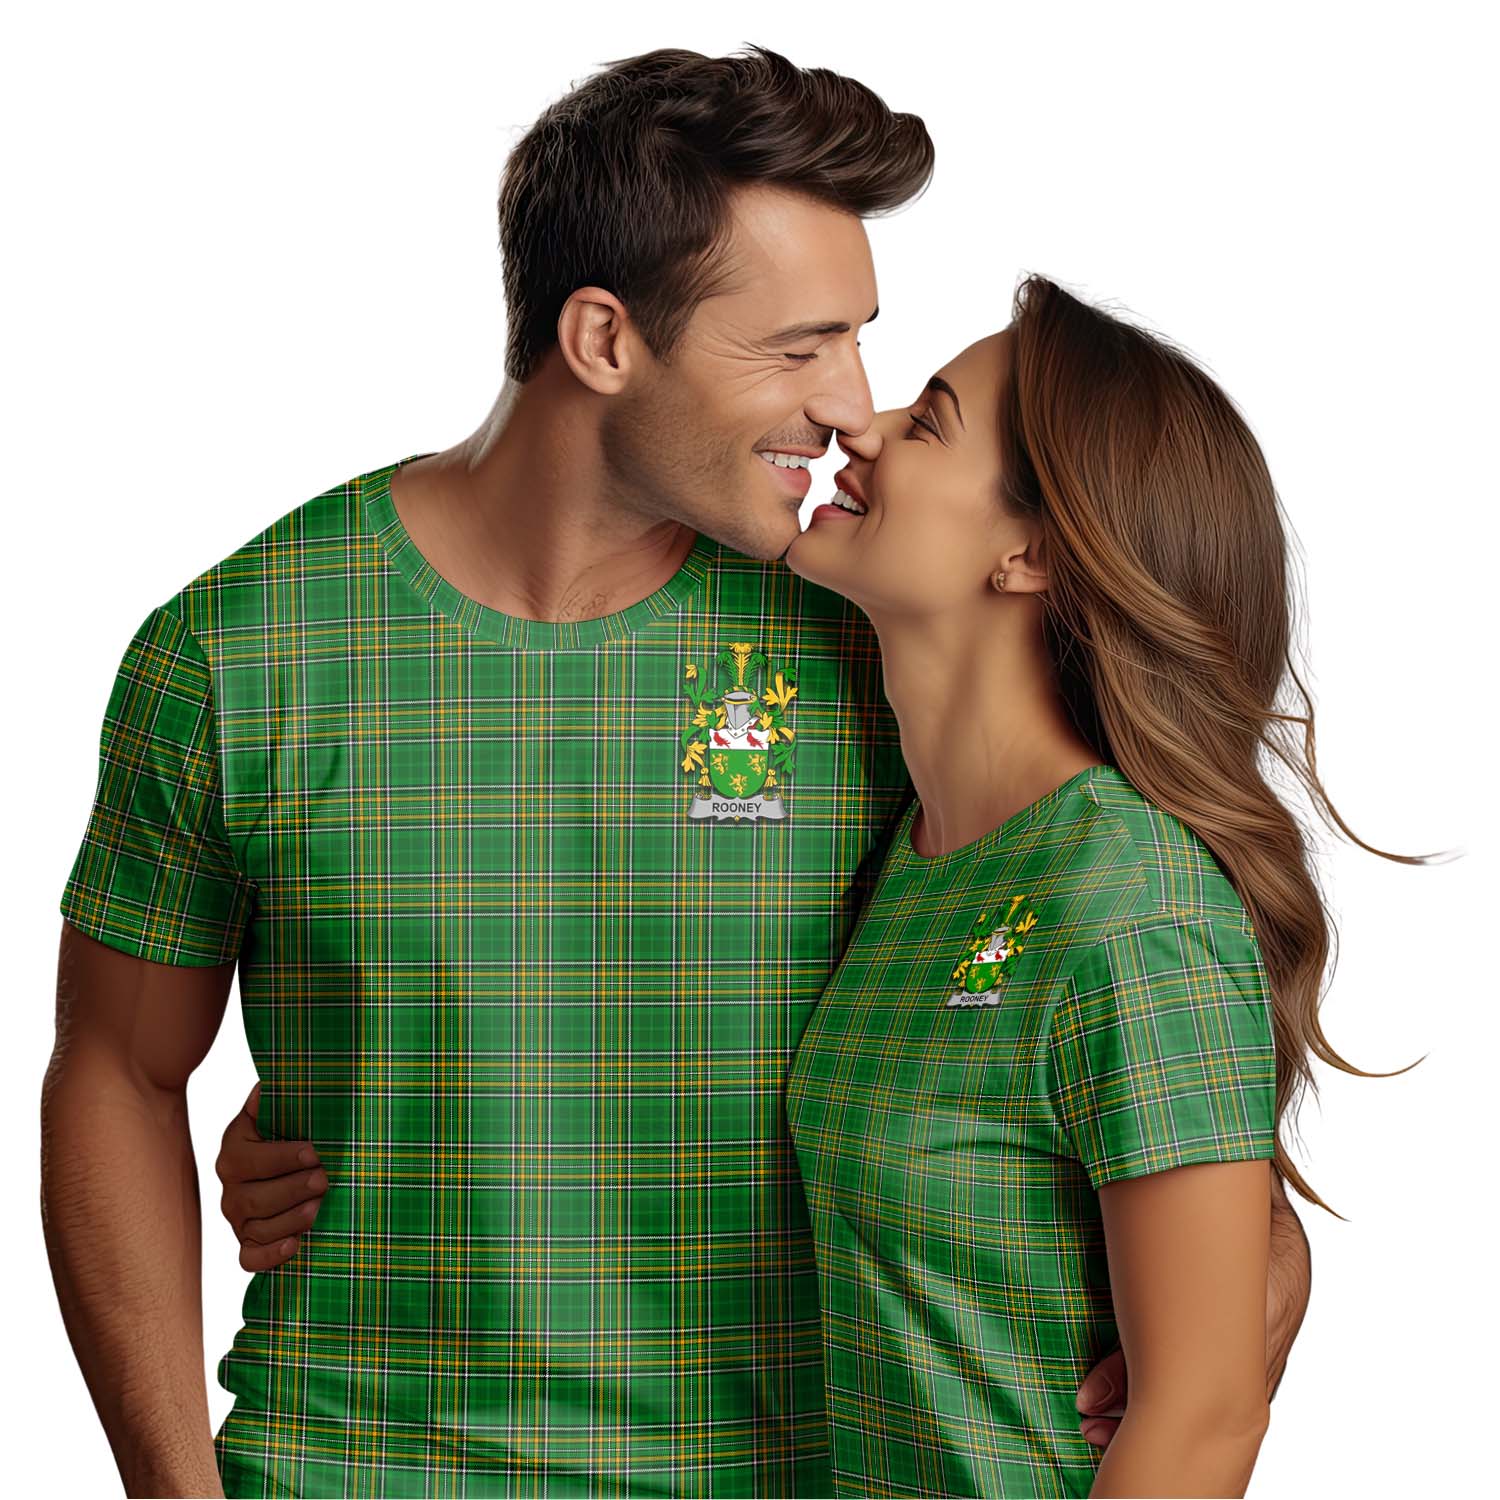 Tartan Vibes Clothing Rooney Ireland Clan Tartan T-Shirt with Family Seal